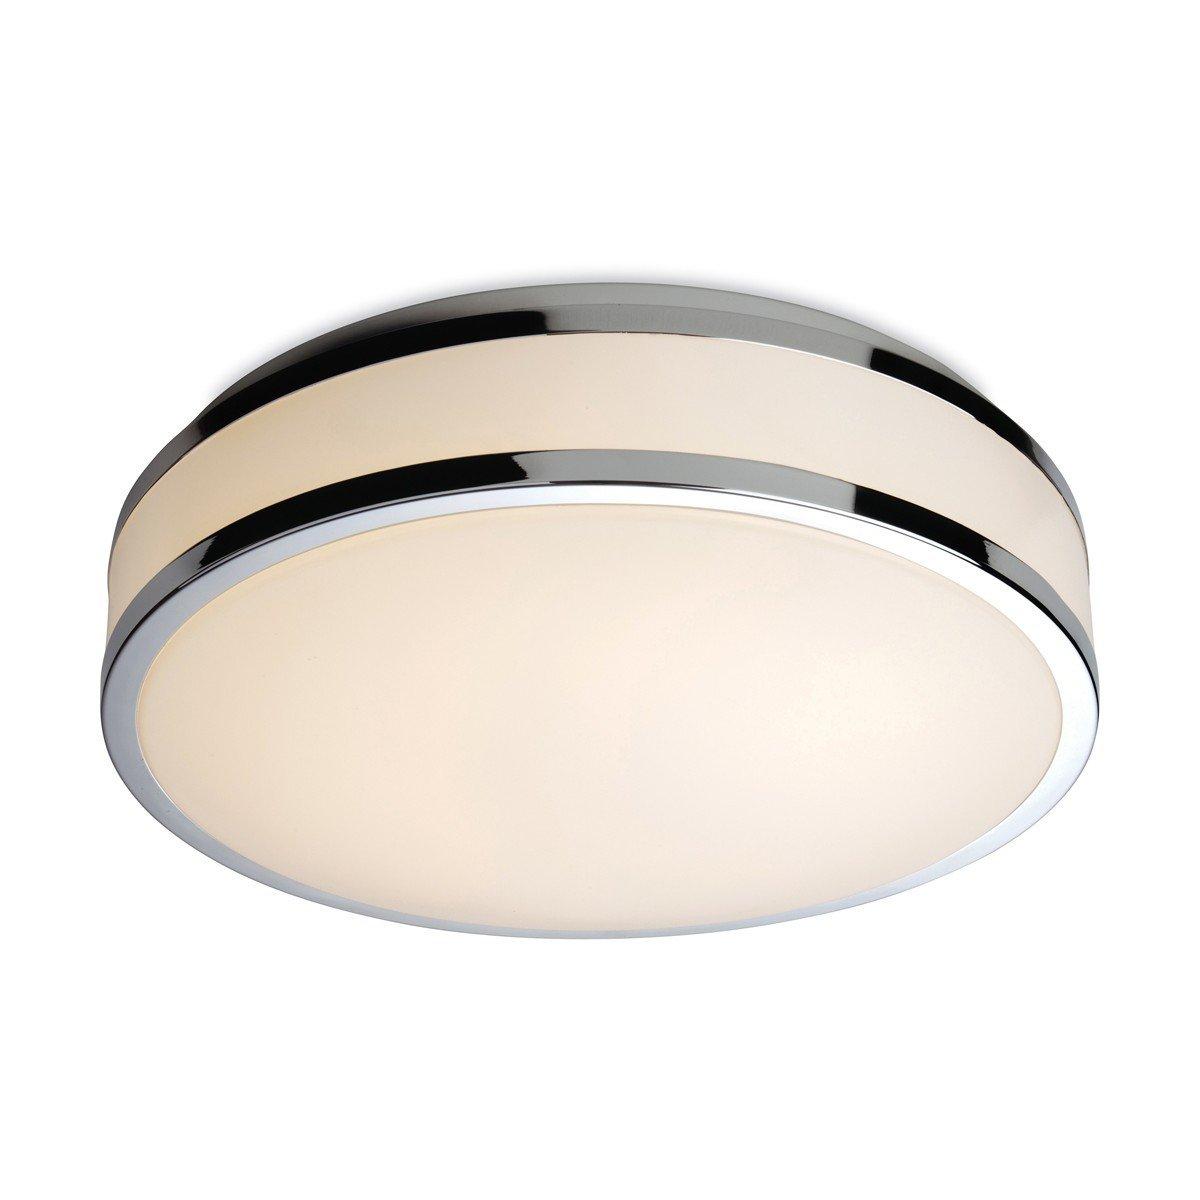 Atlantis LED Round Flush Bathroom Ceiling Light White Diffuser Chrome Trim IP44